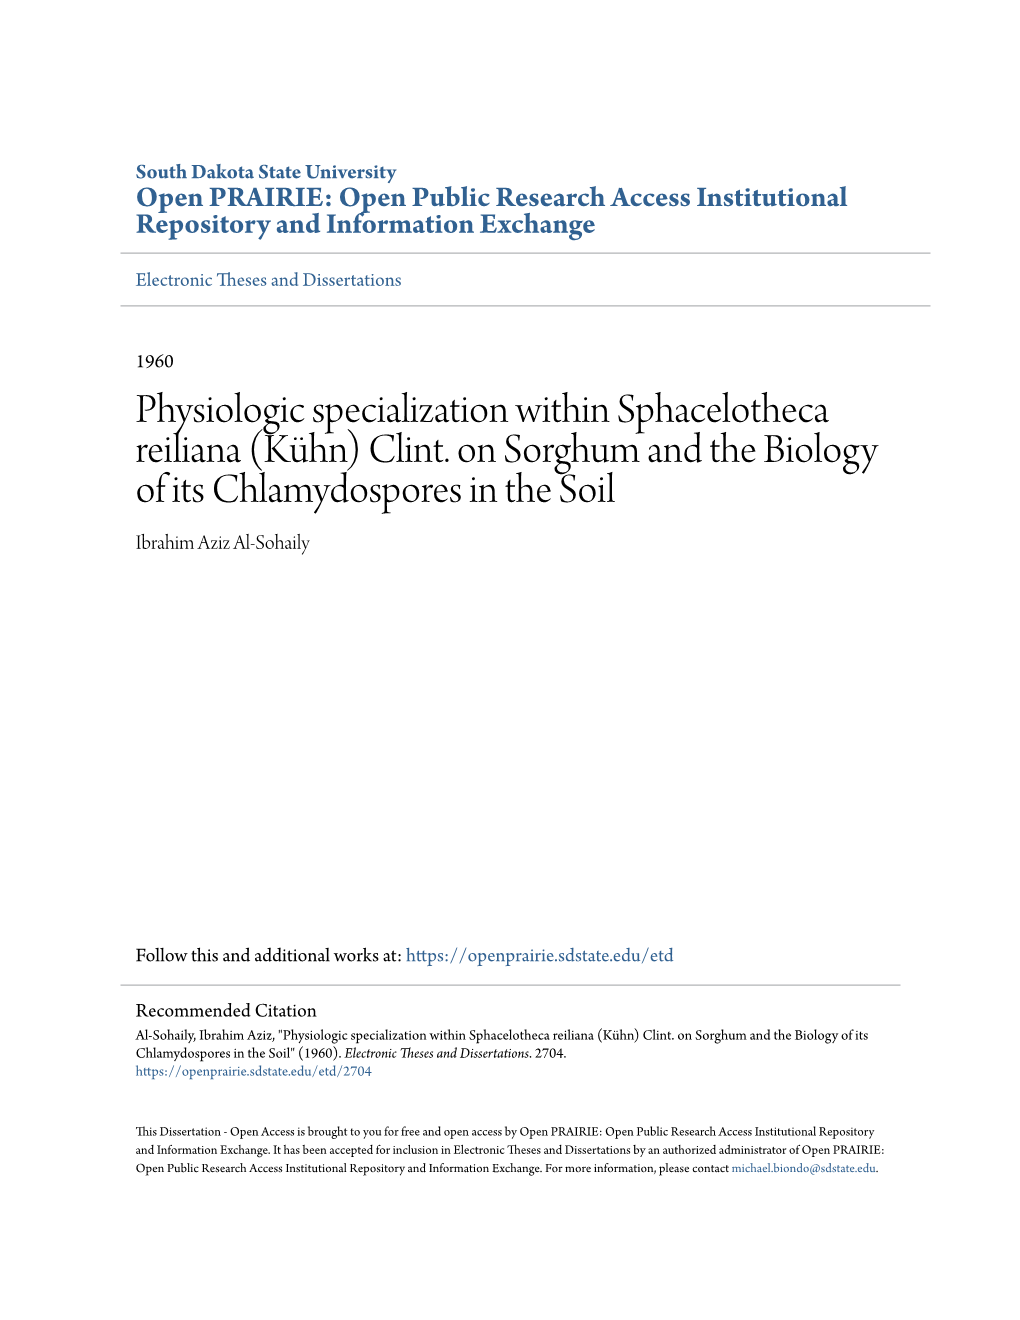 Physiologic Specialization Within Sphacelotheca Reiliana (Kühn) Clint